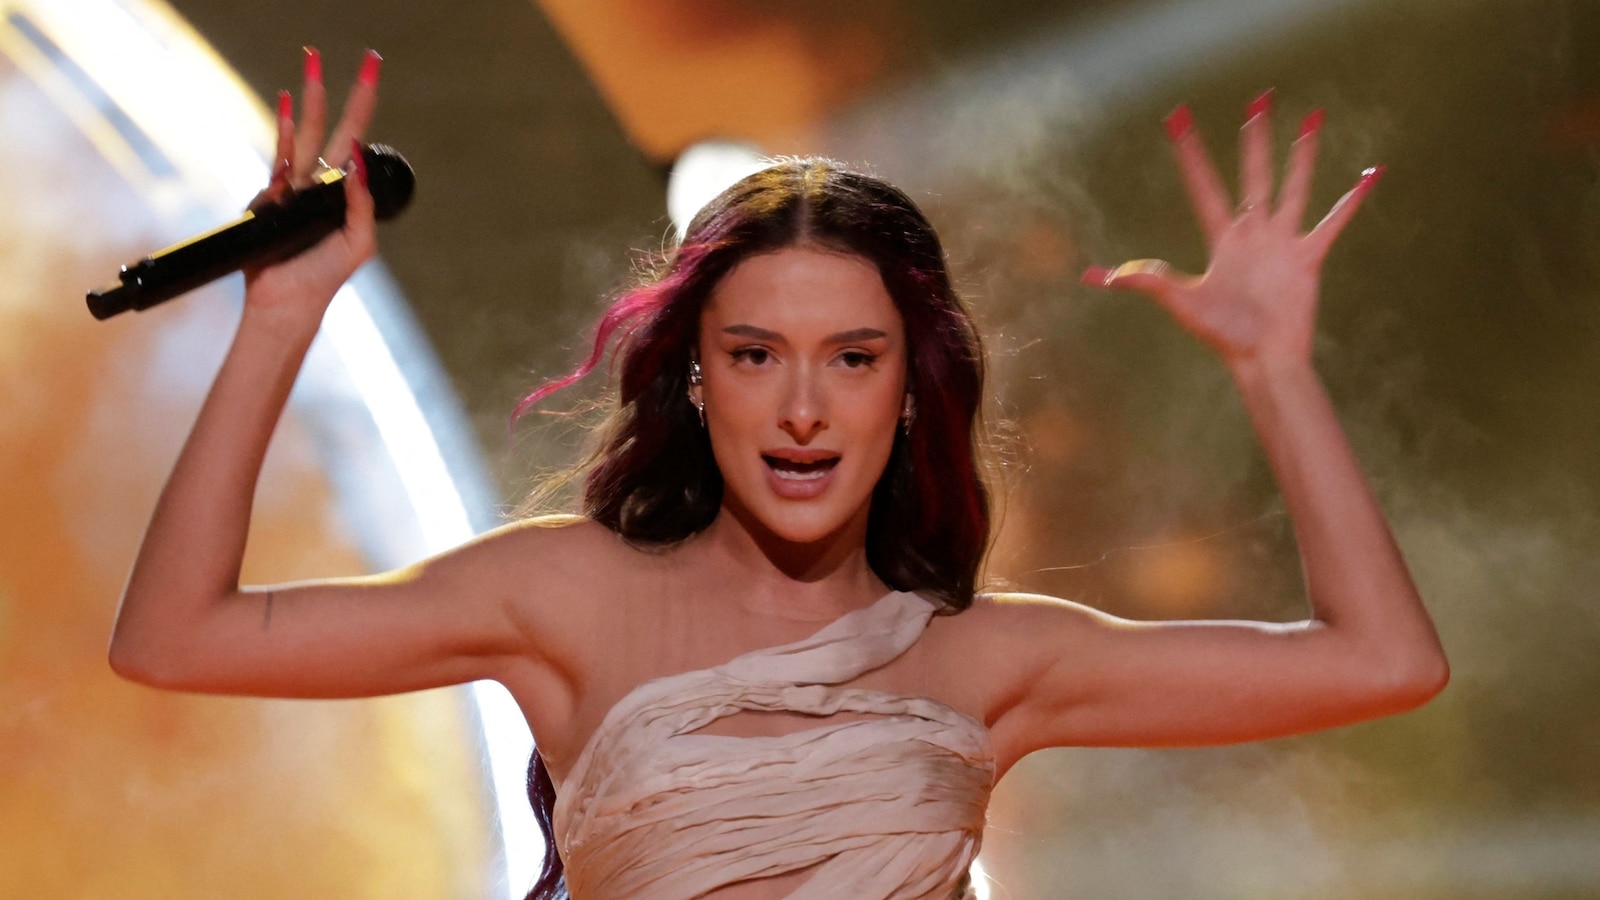 Israeli contestant advances to final despite protests, controversy at Eurovision Song Contest [Video]